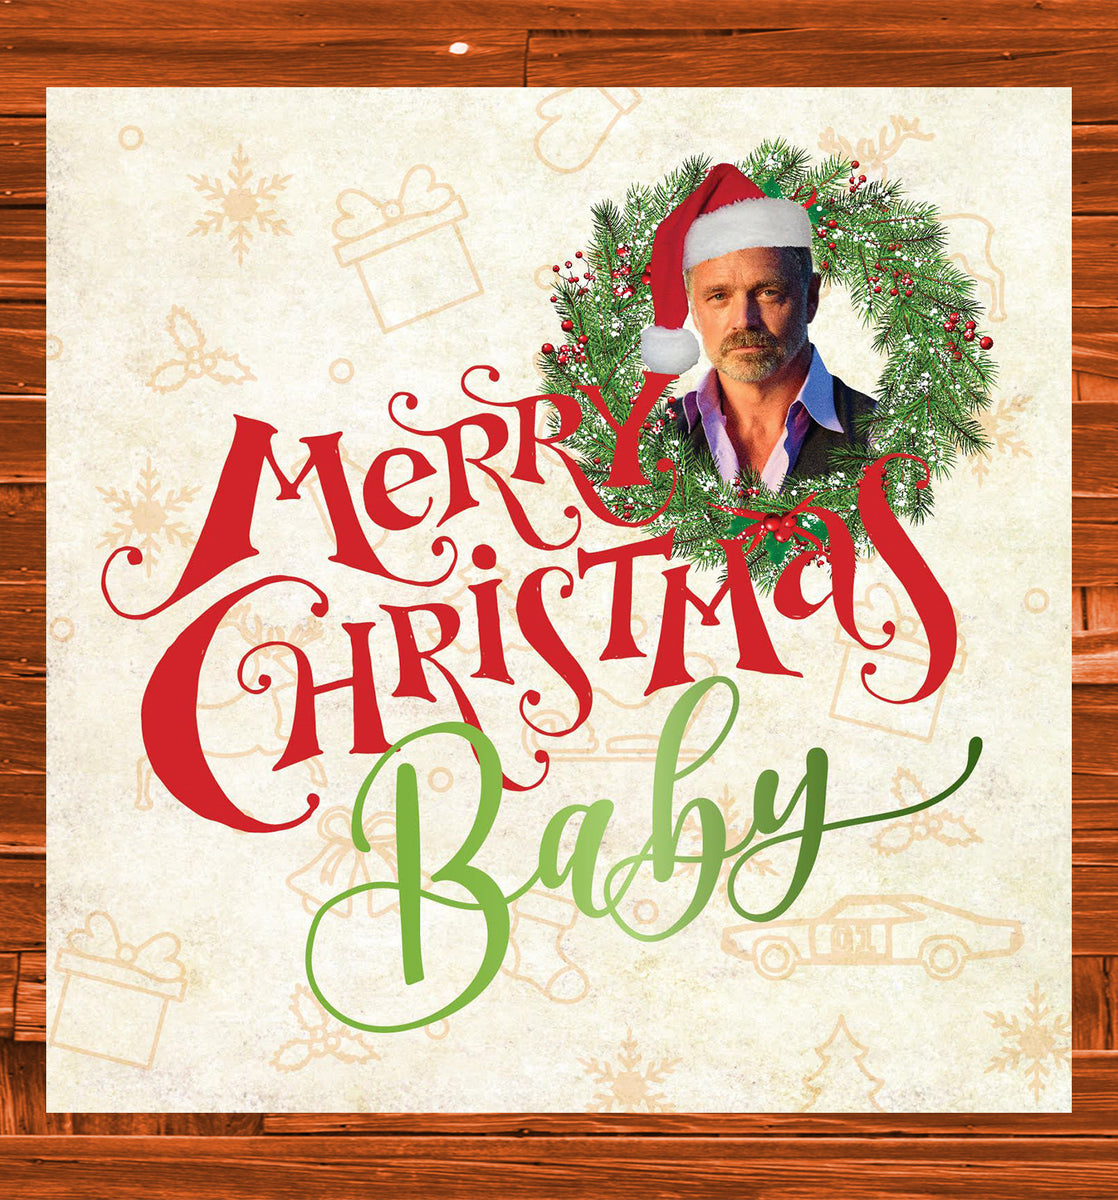 Merry Christmas, Baby: CDs & Vinyl 